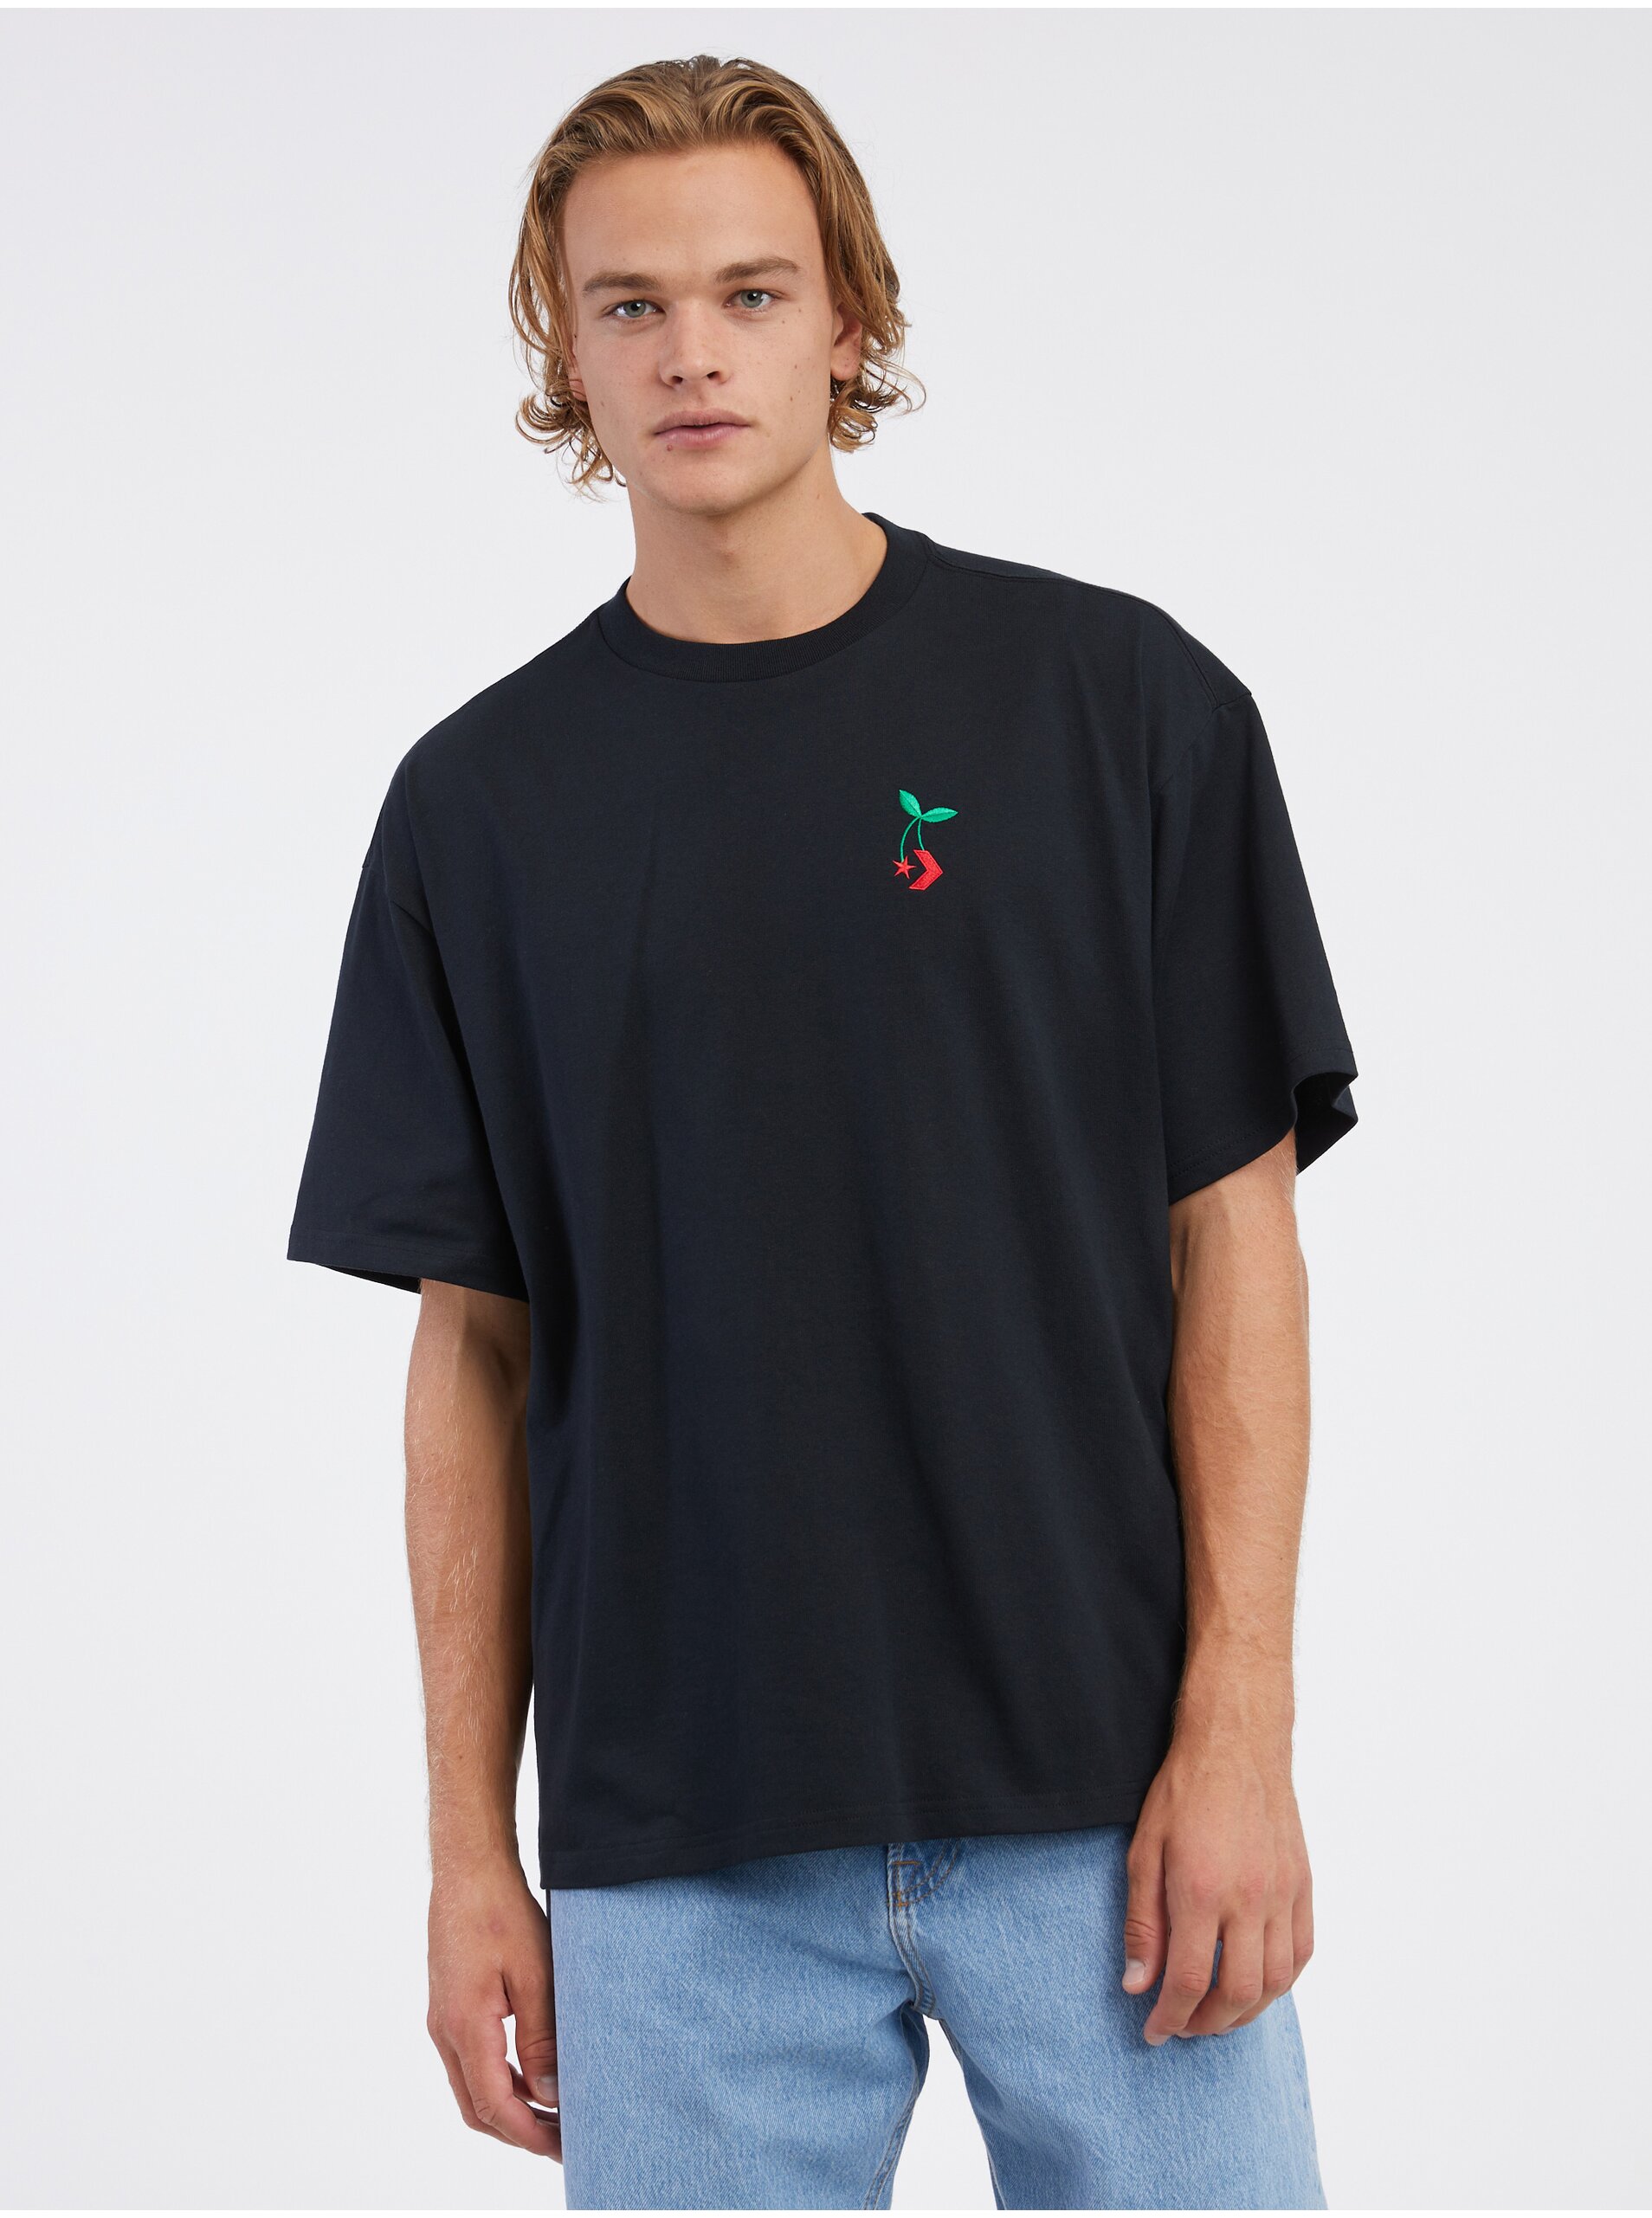 Black Men's T-Shirt Converse Star Chevron Cherry - Men